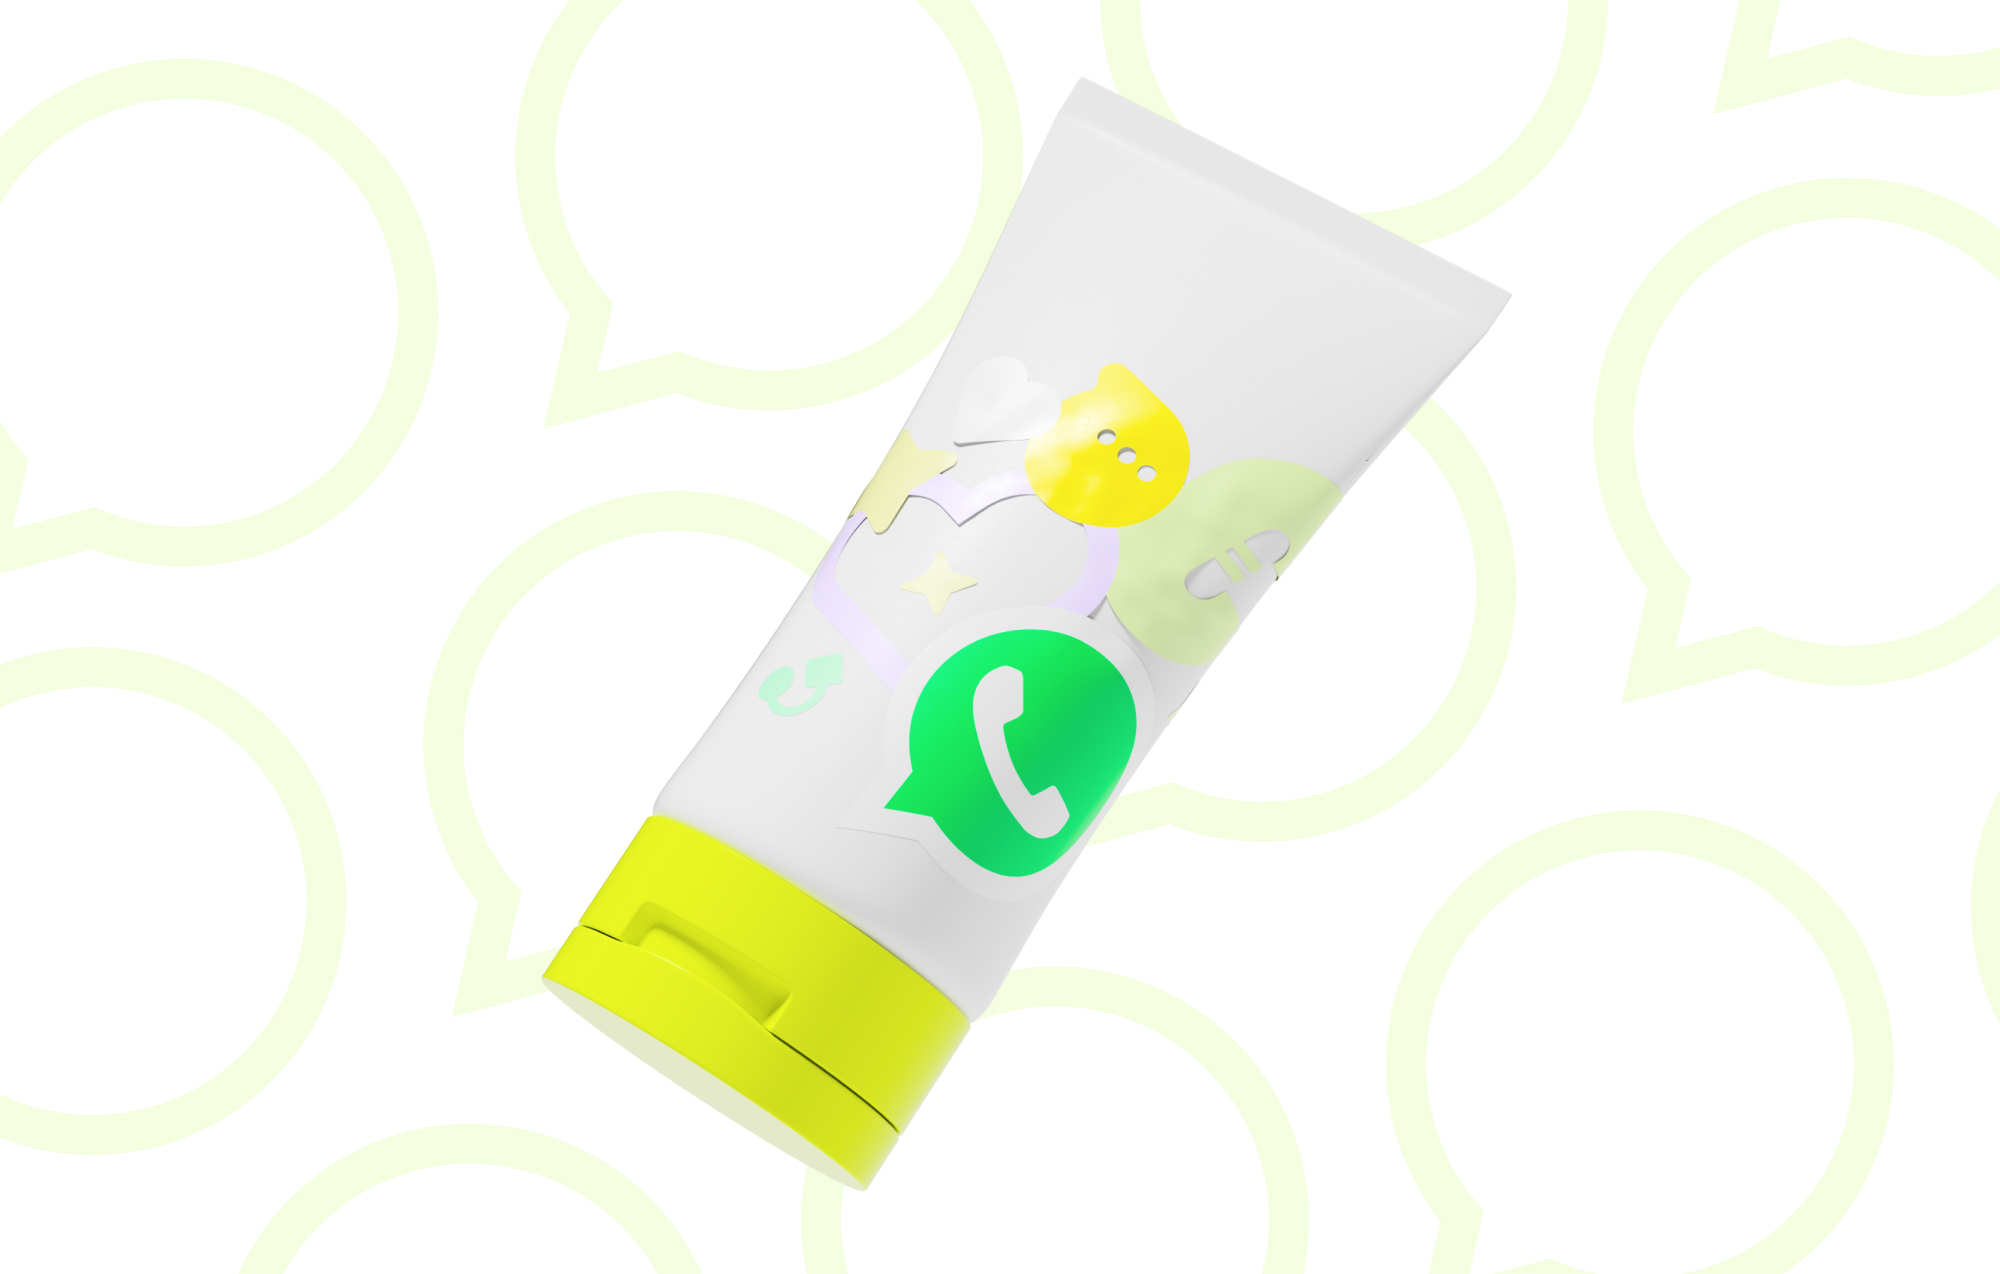 Tube of beauty cream with WhatsApp logo and charles logo